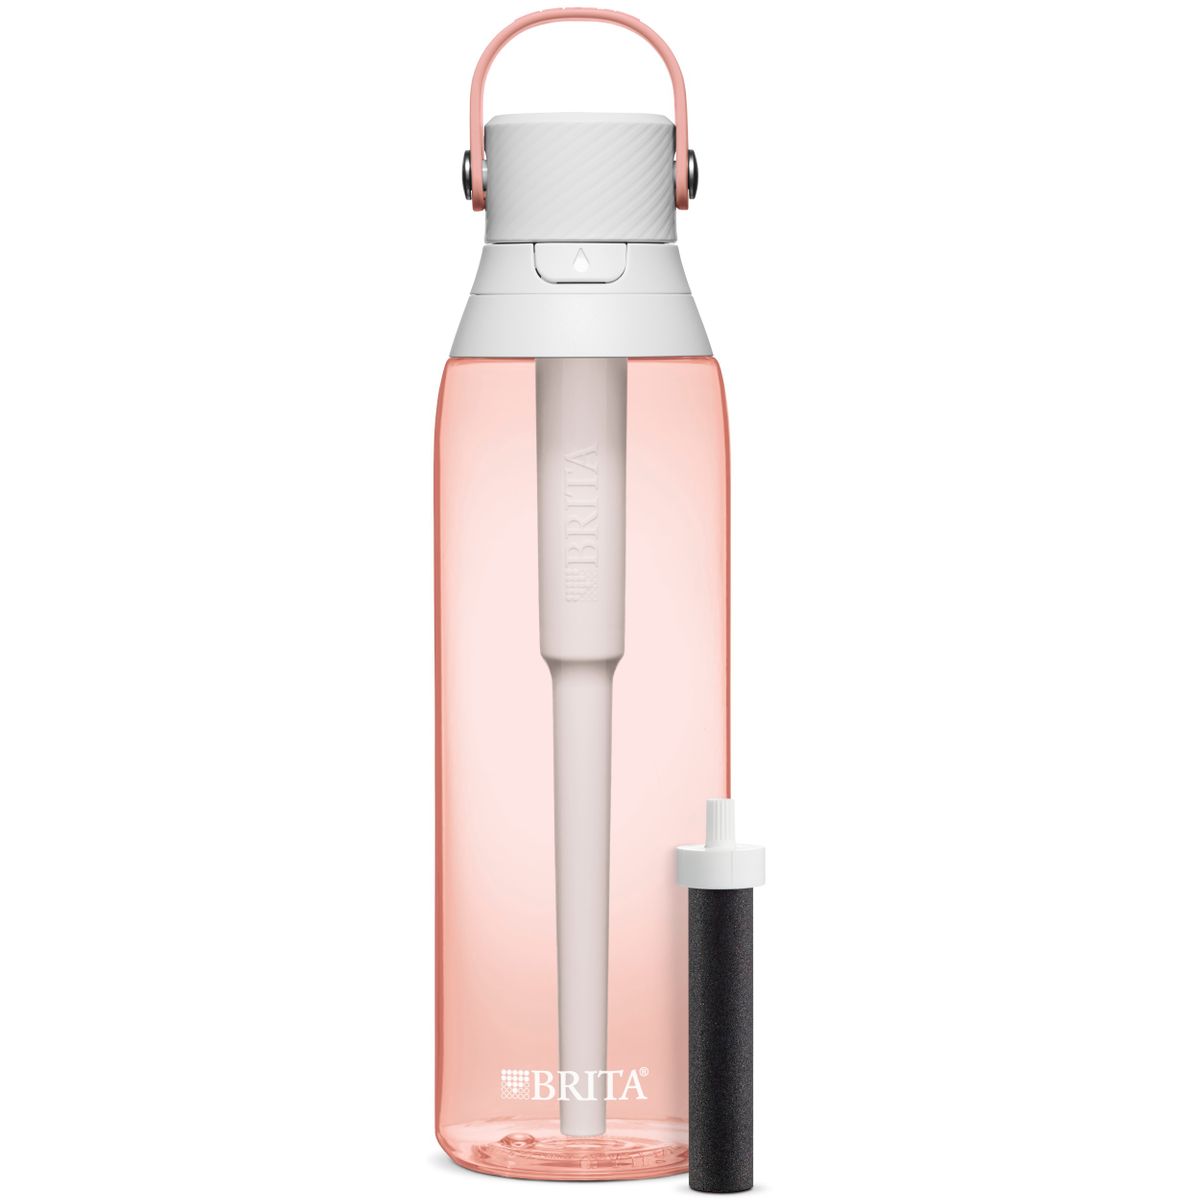 RDY 送料無料 Brita 26oz プレミアムウォーターボトル フィルター付き BPAフリー ブラッシュピンク 楽天海外通販 Brita 26oz Premium Water Bottle with Filter, BPA Free, Blush Pink